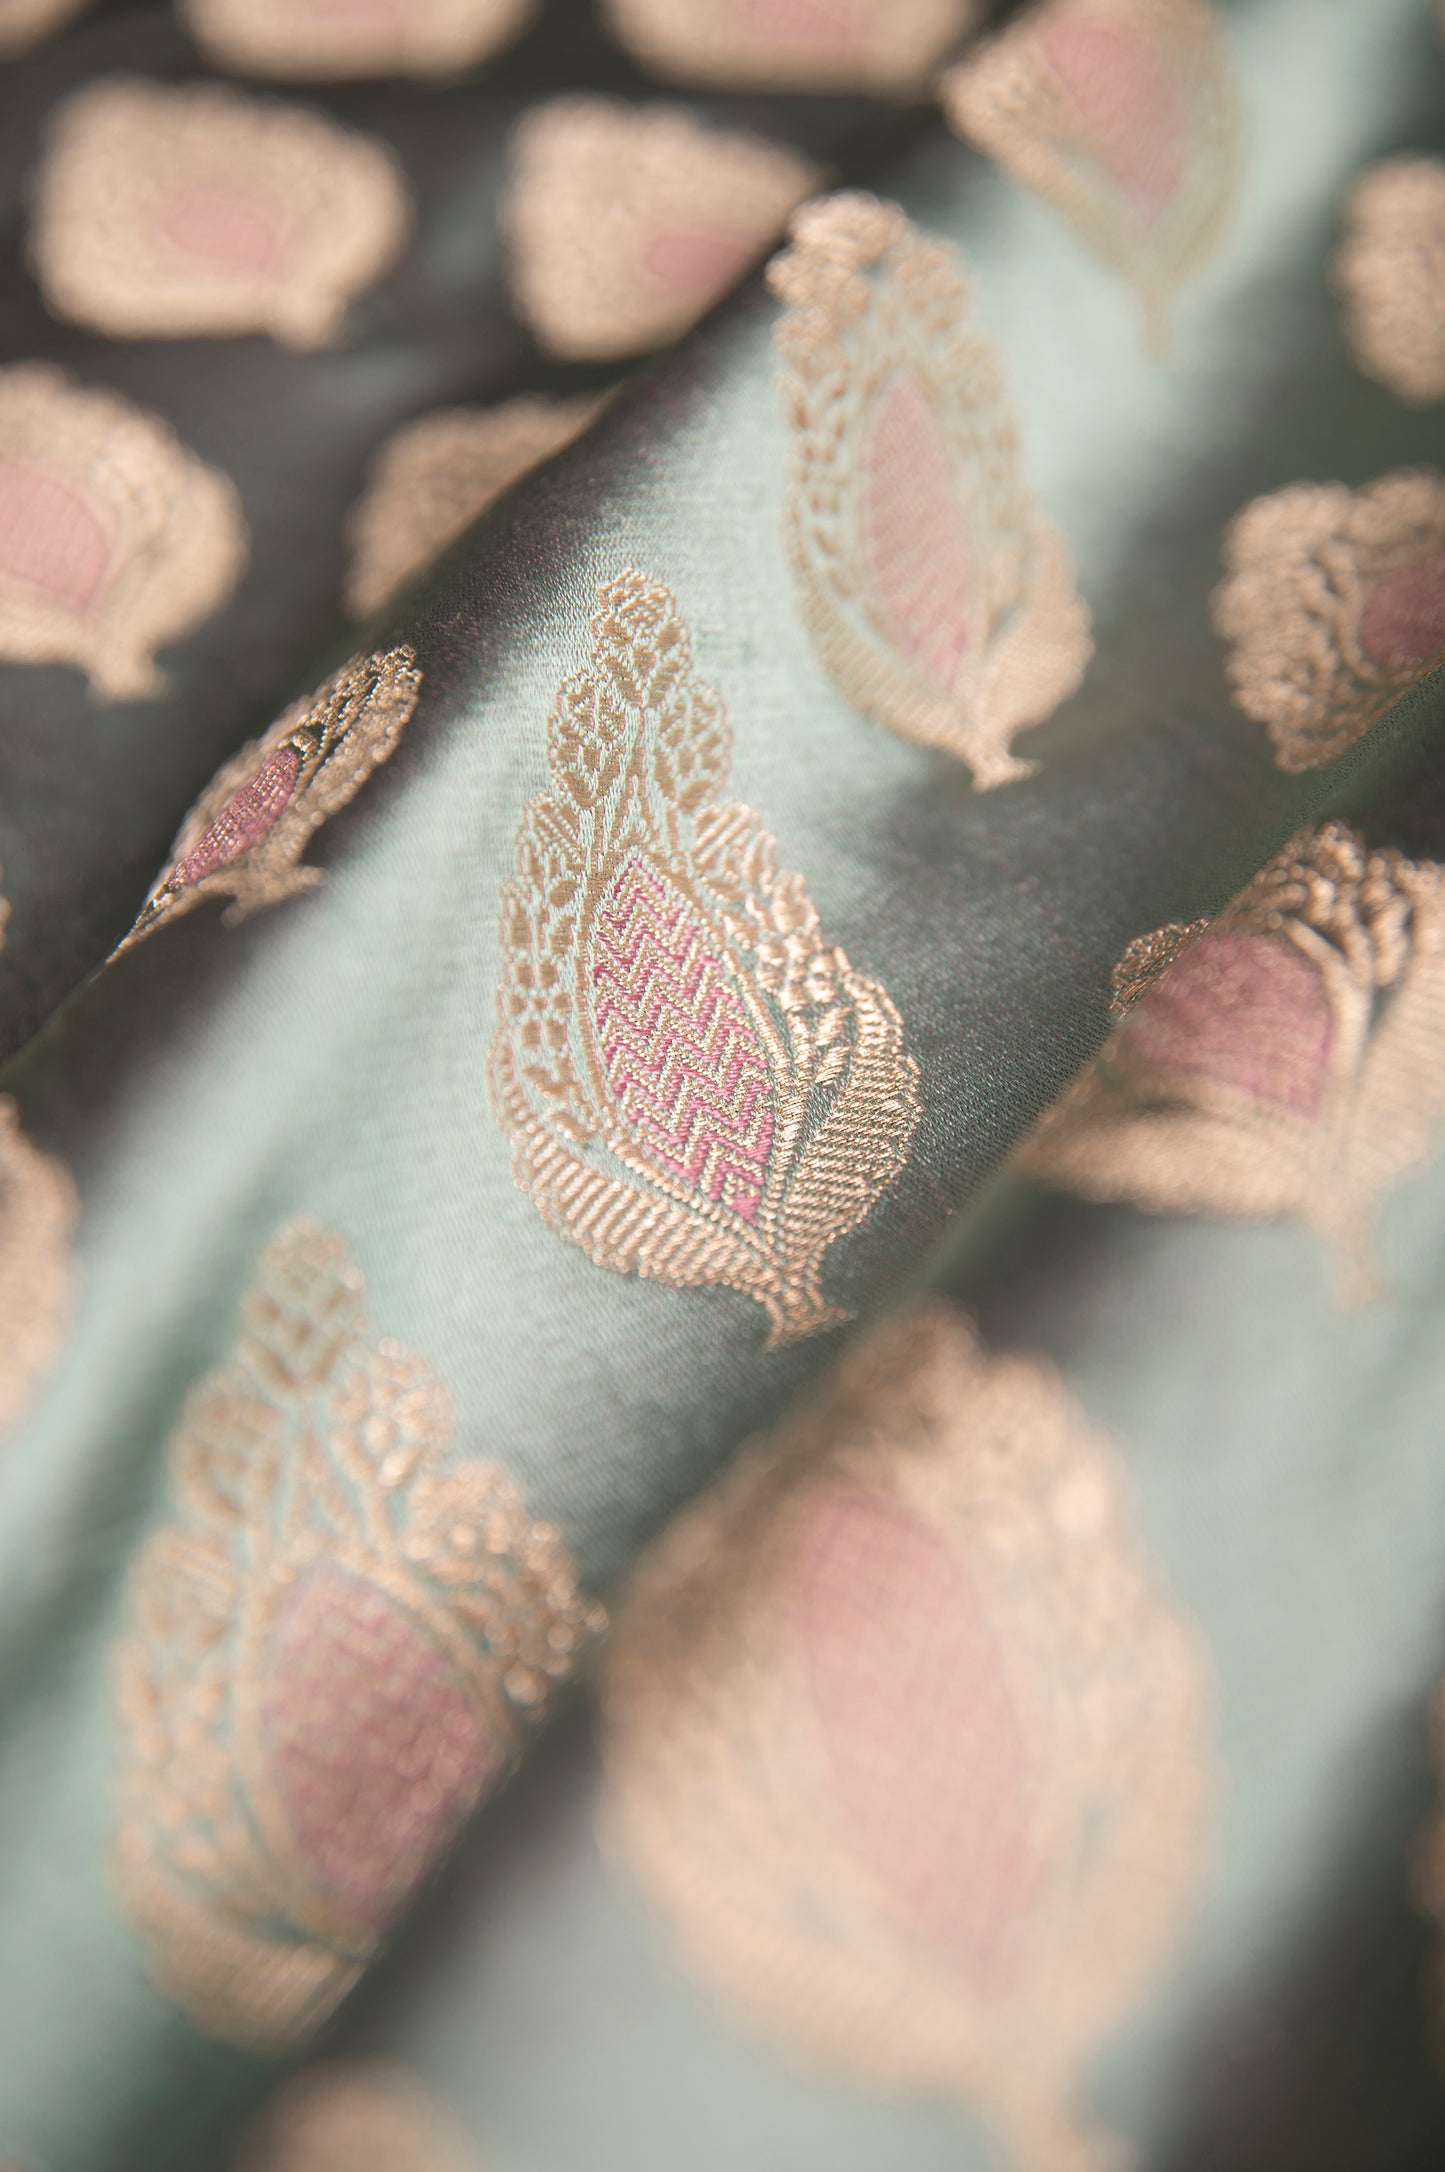 Handwoven Blue Satin Silk Fabric